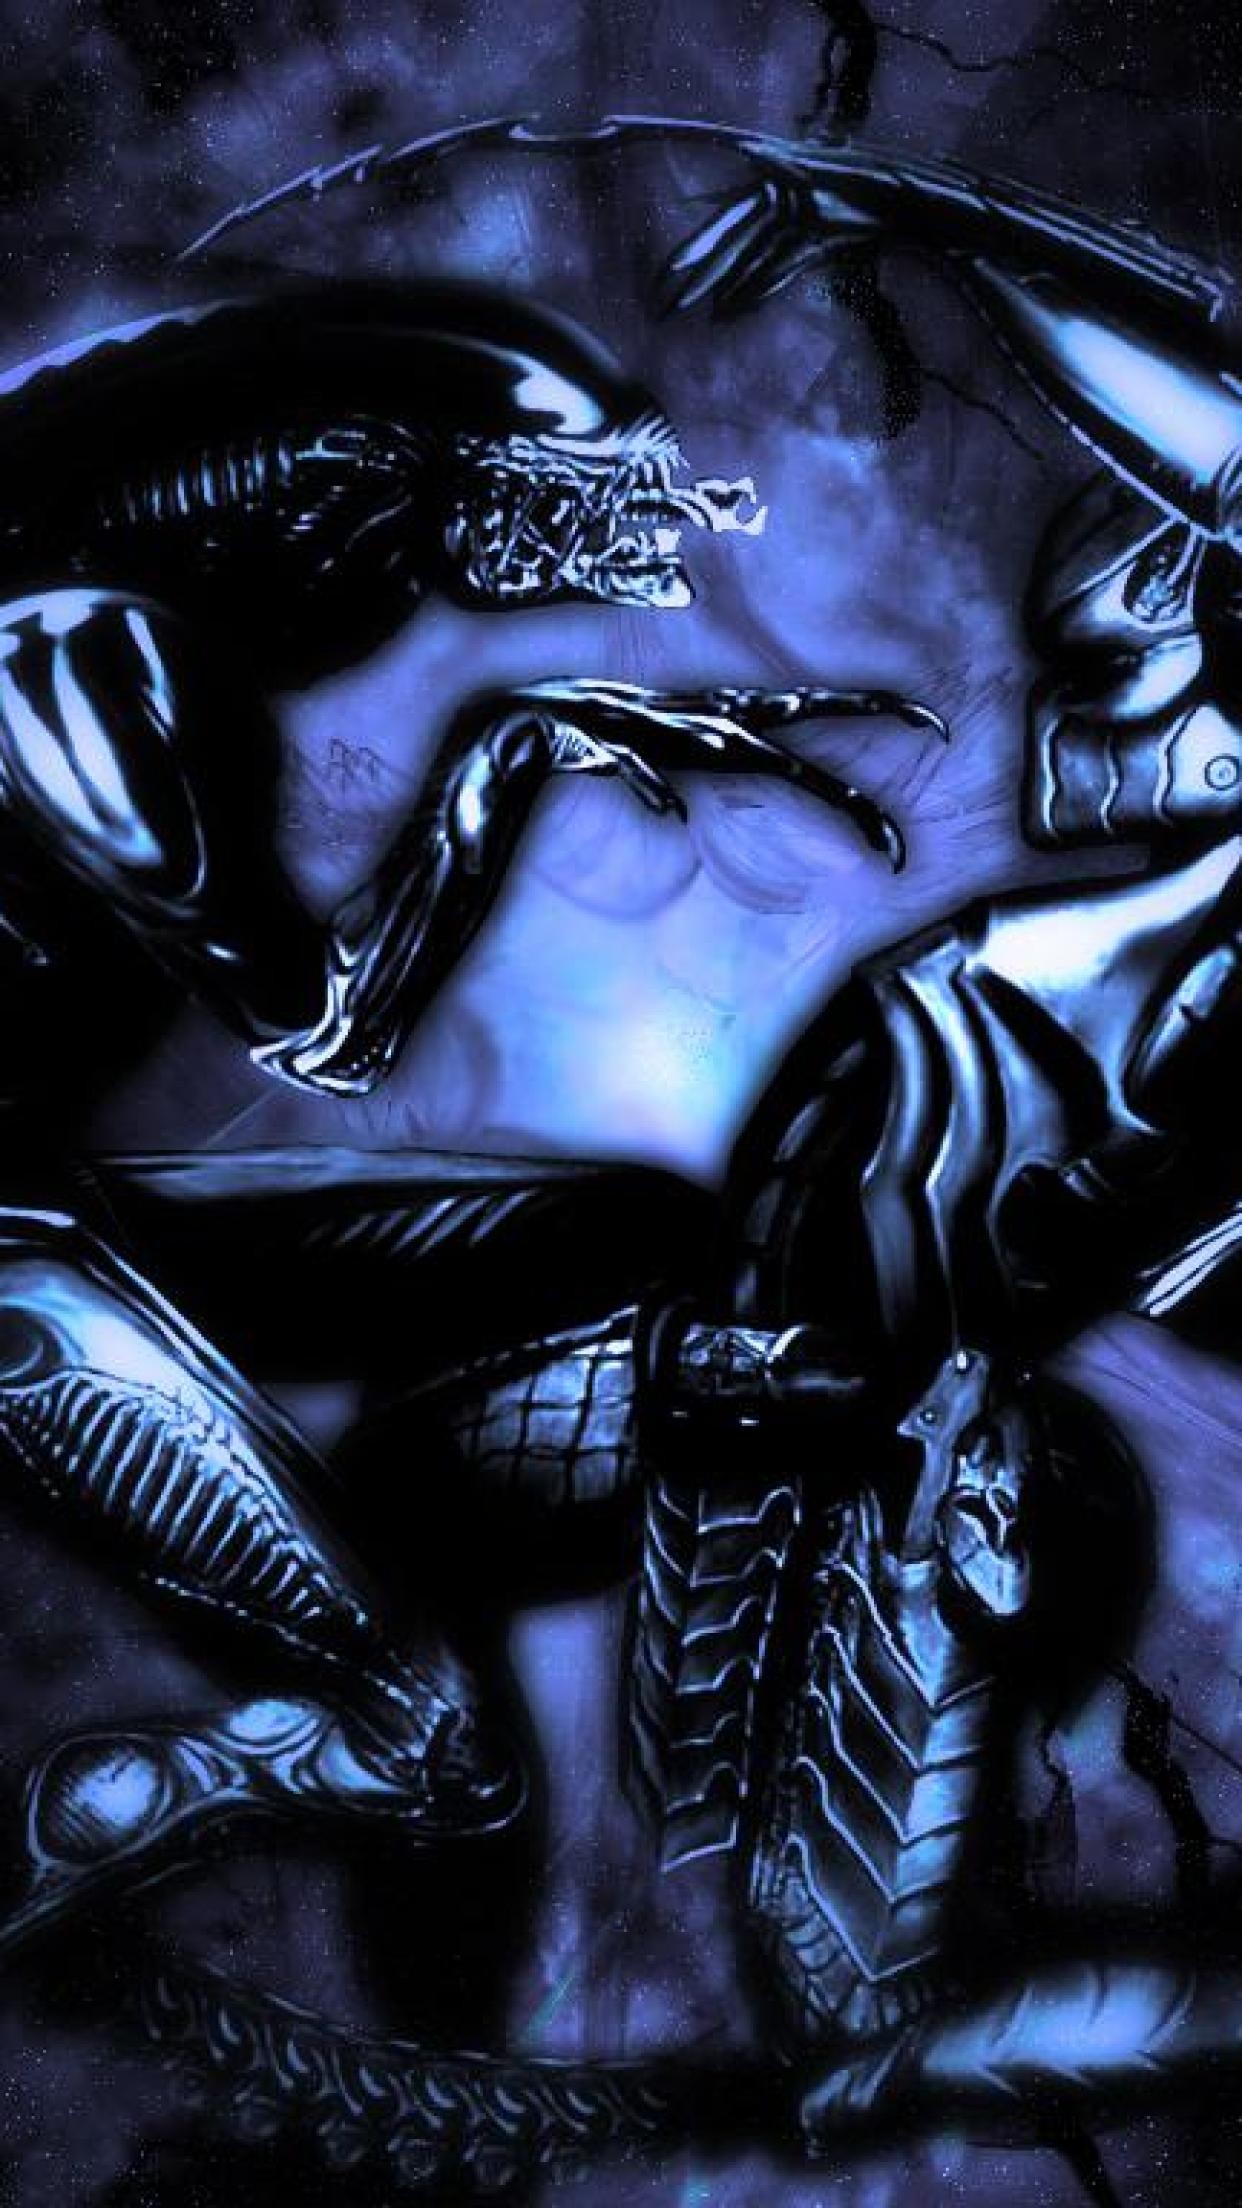 alien vs predator wallpaper,cg artwork,darkness,demon,fictional character,illustration